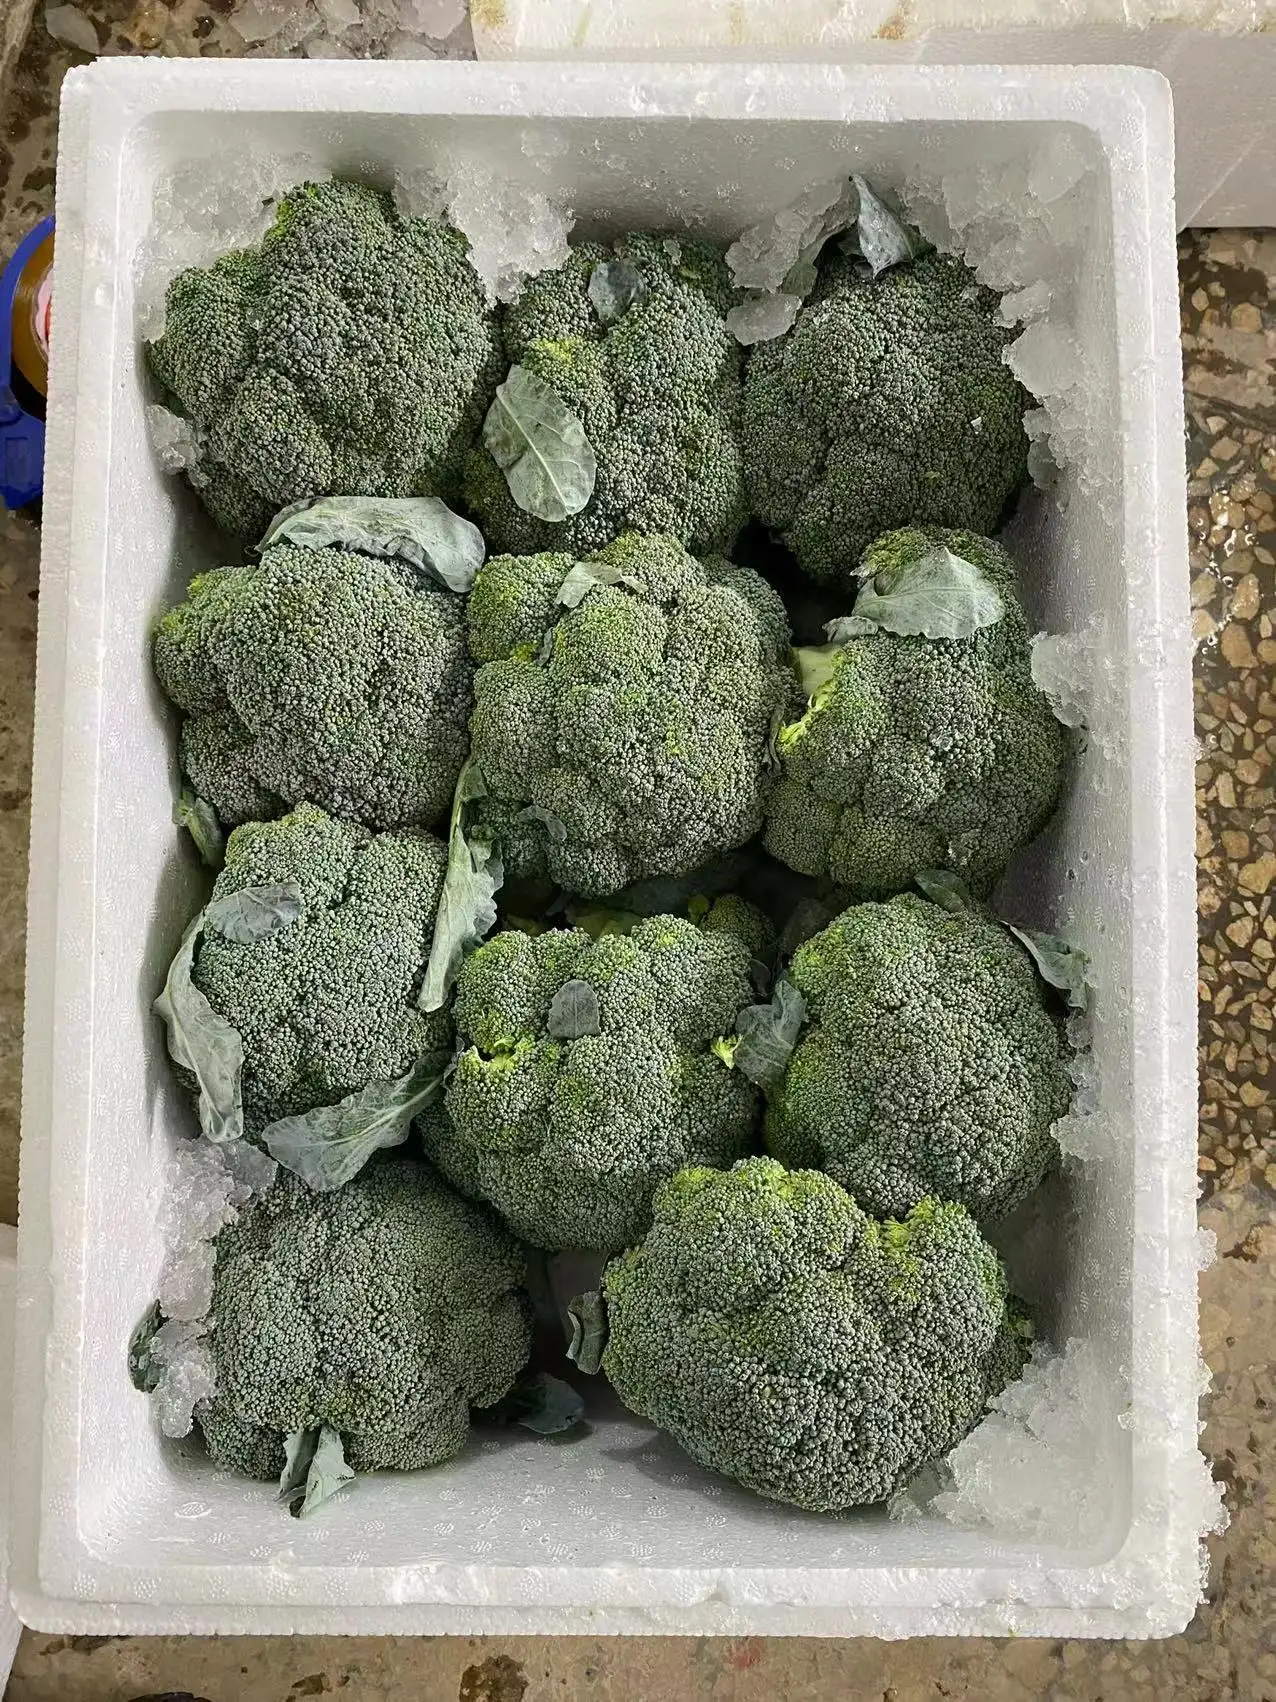 Cina verdure fresche Premium Broccoli freschi biologici